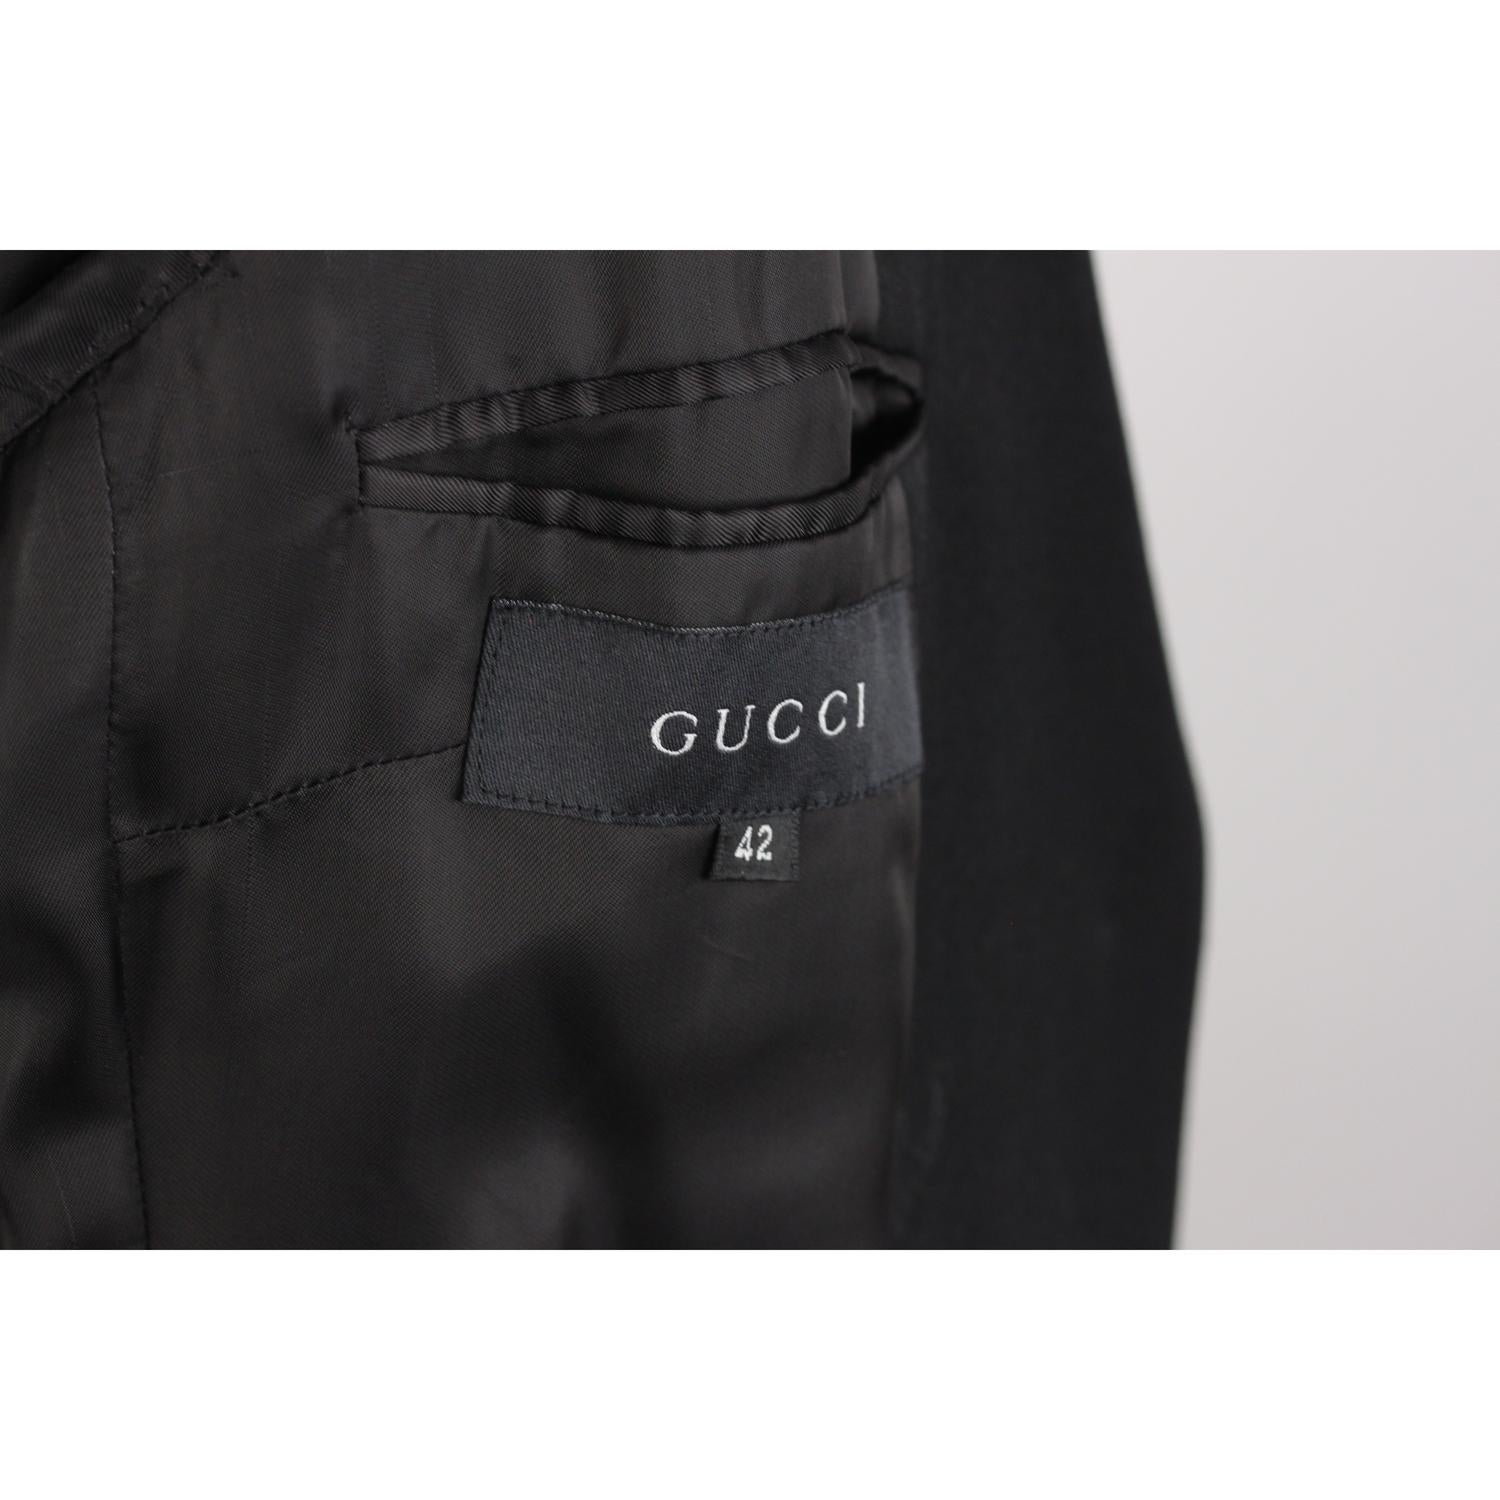 Gucci Black Wool Blazer with Leather Belt Tom Ford Era Size 42 3